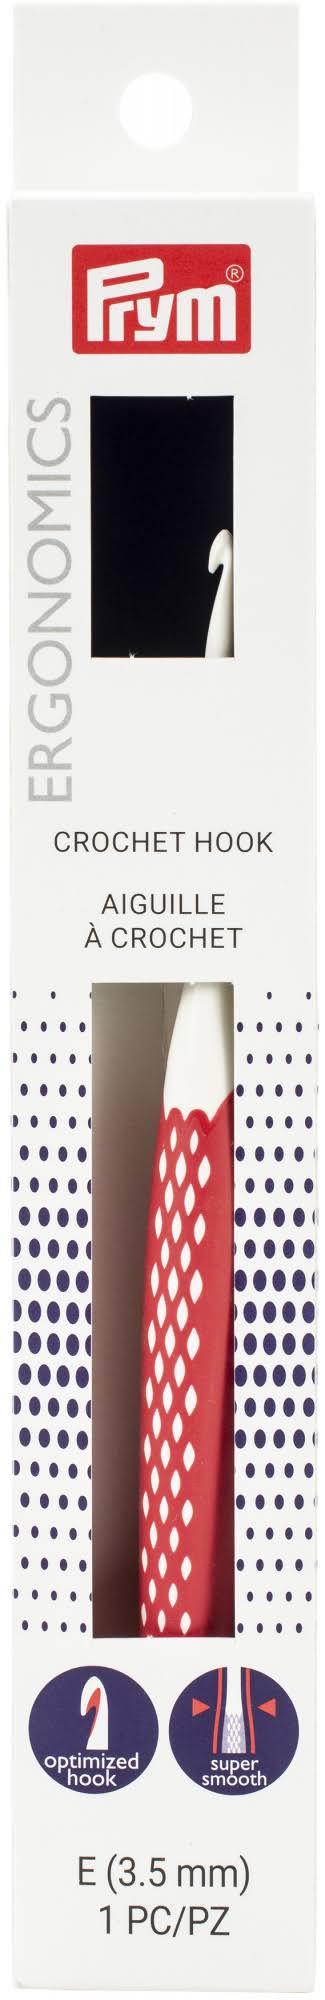 Prym Crochet Hook | Knitting & Crochet